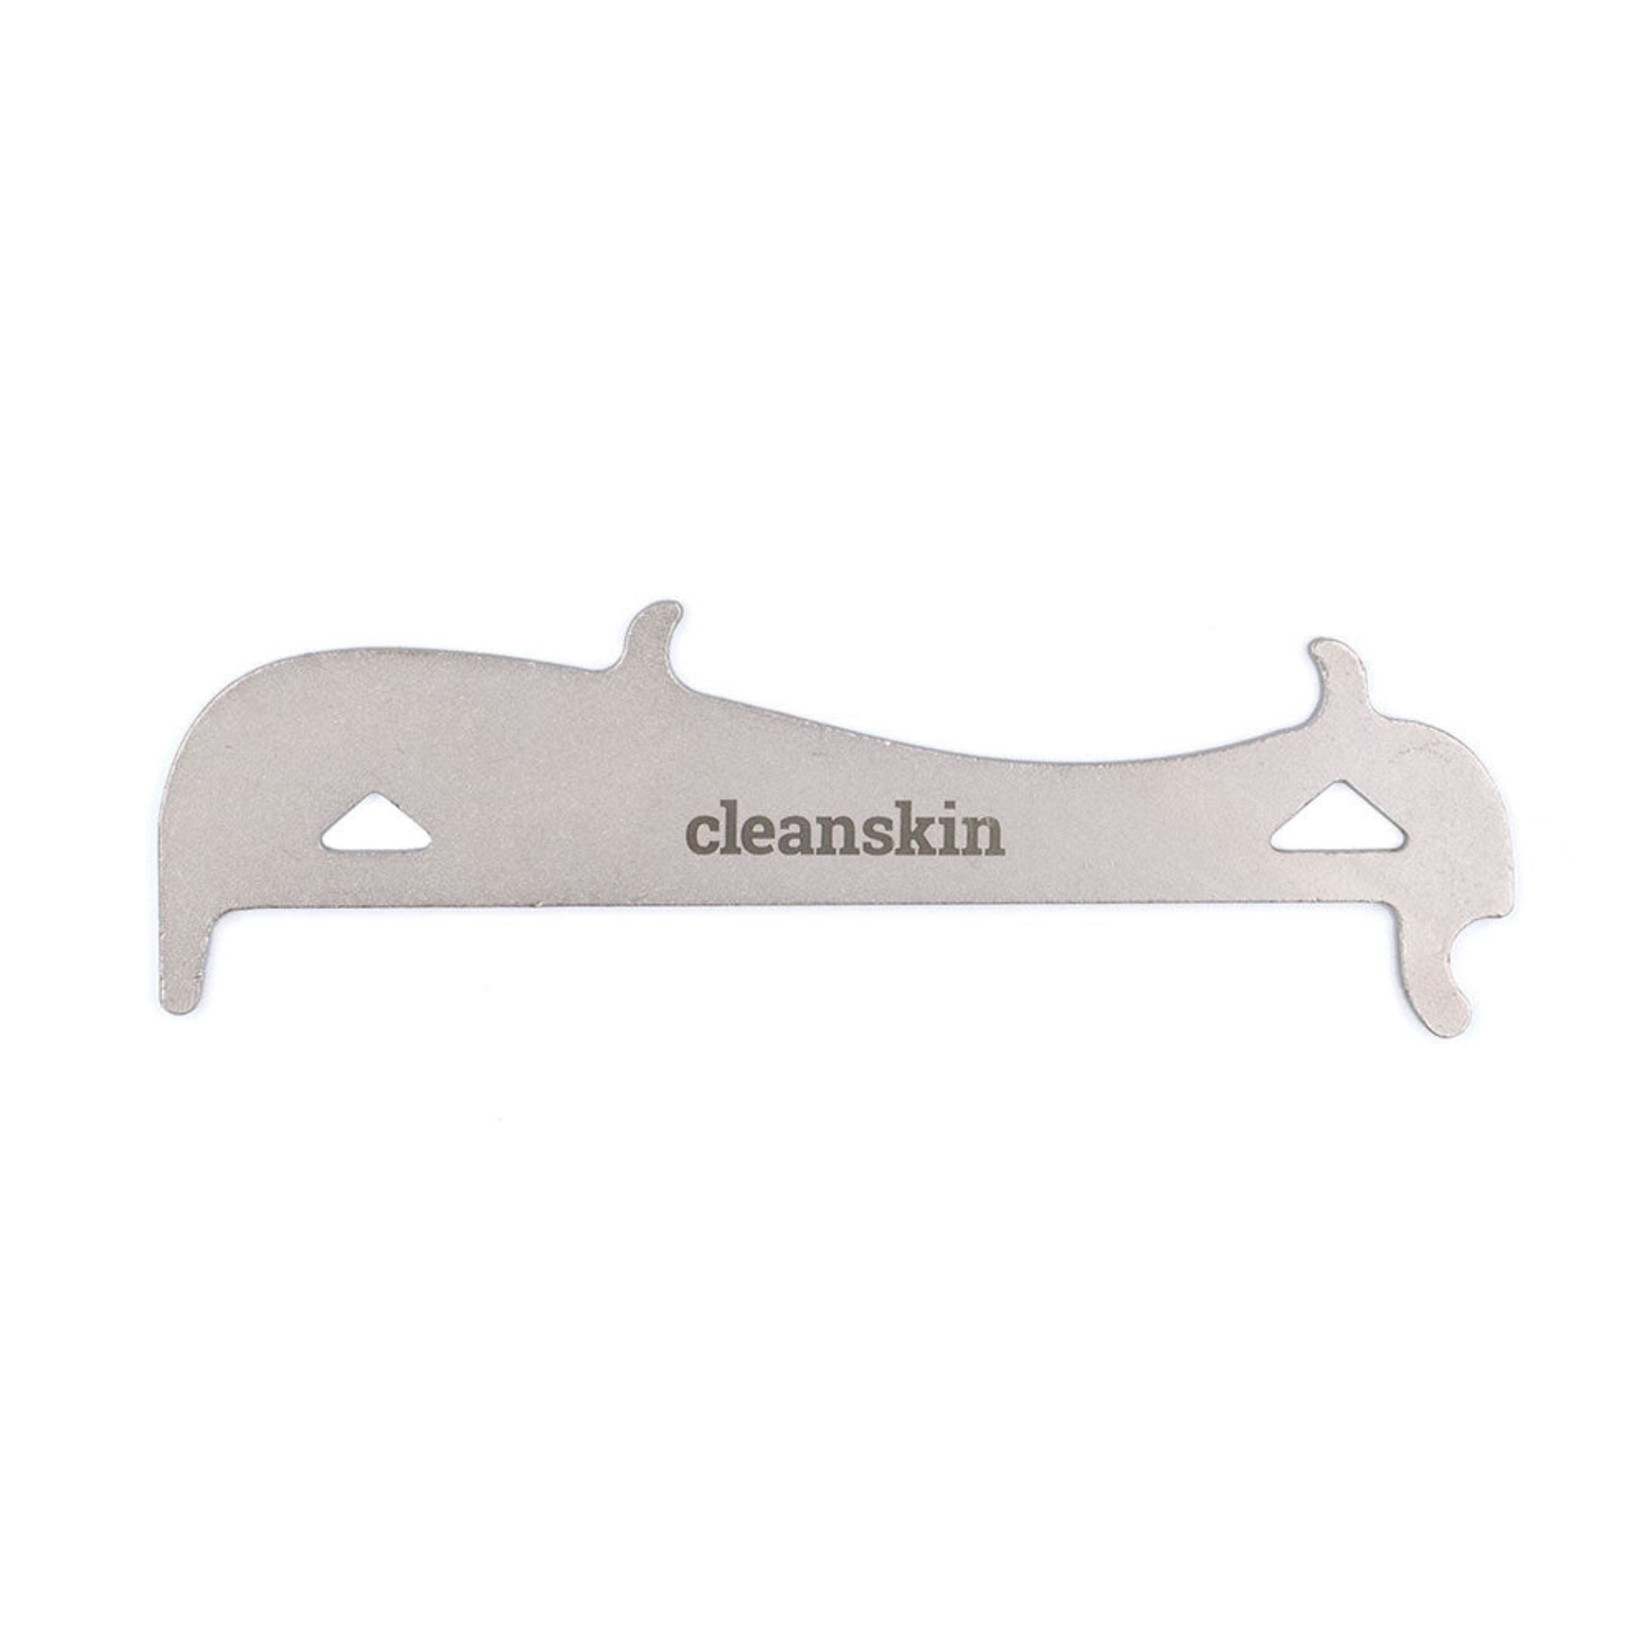 Cleanskin Cleanskin, Chain Wear Checker and Chain Hook